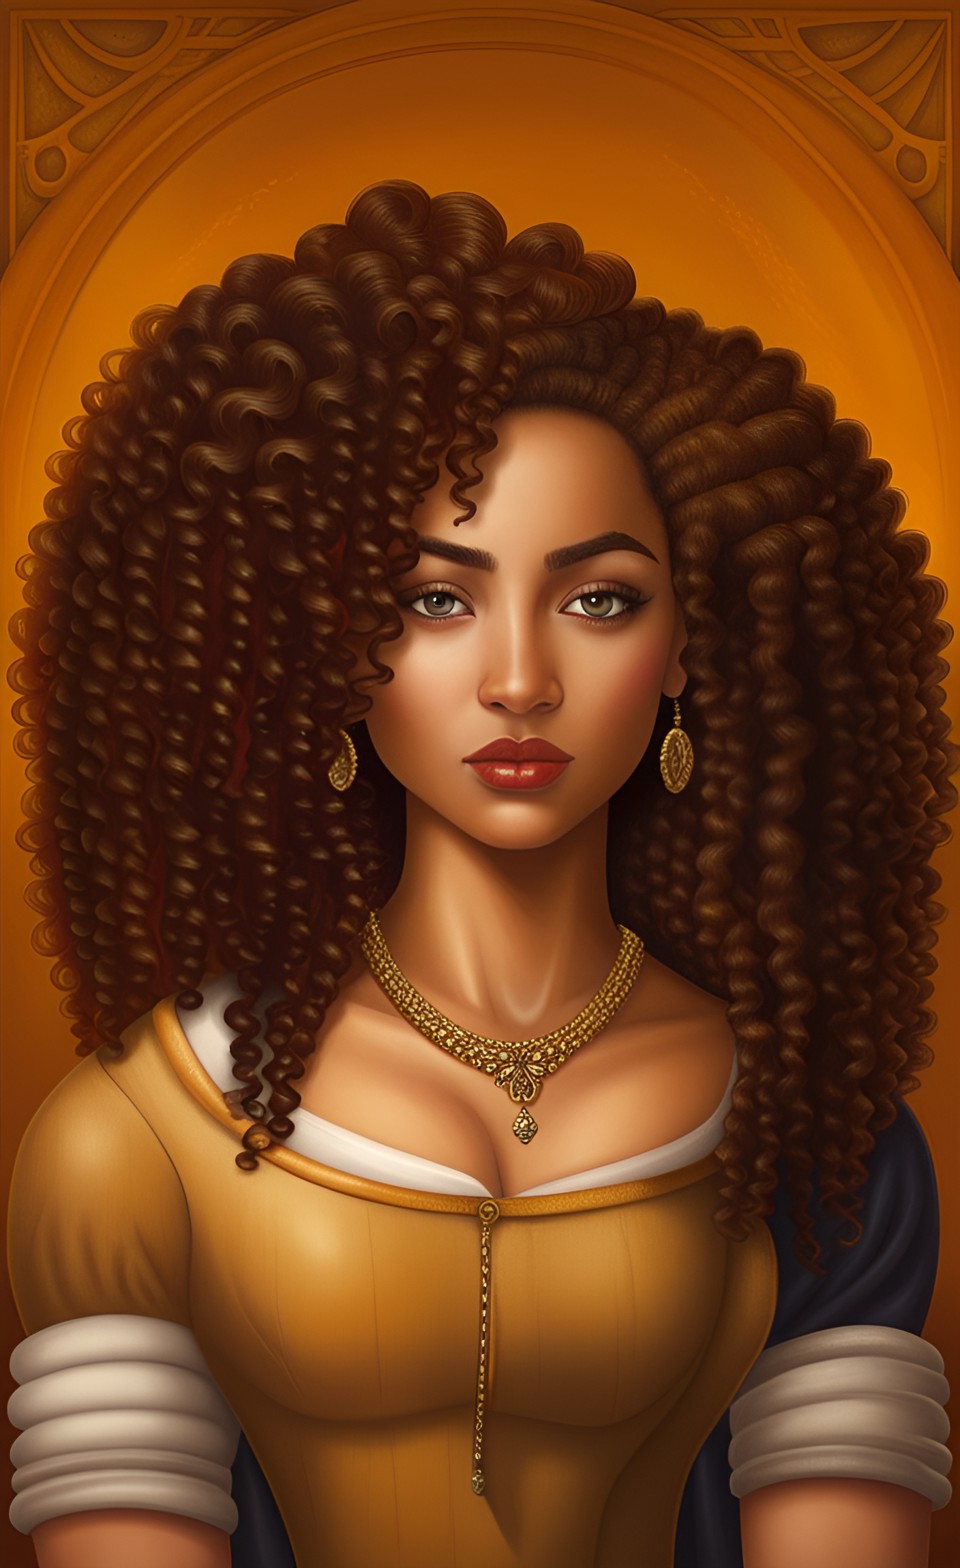 Beautiful iconic art work of mixed-race women Dreamc42